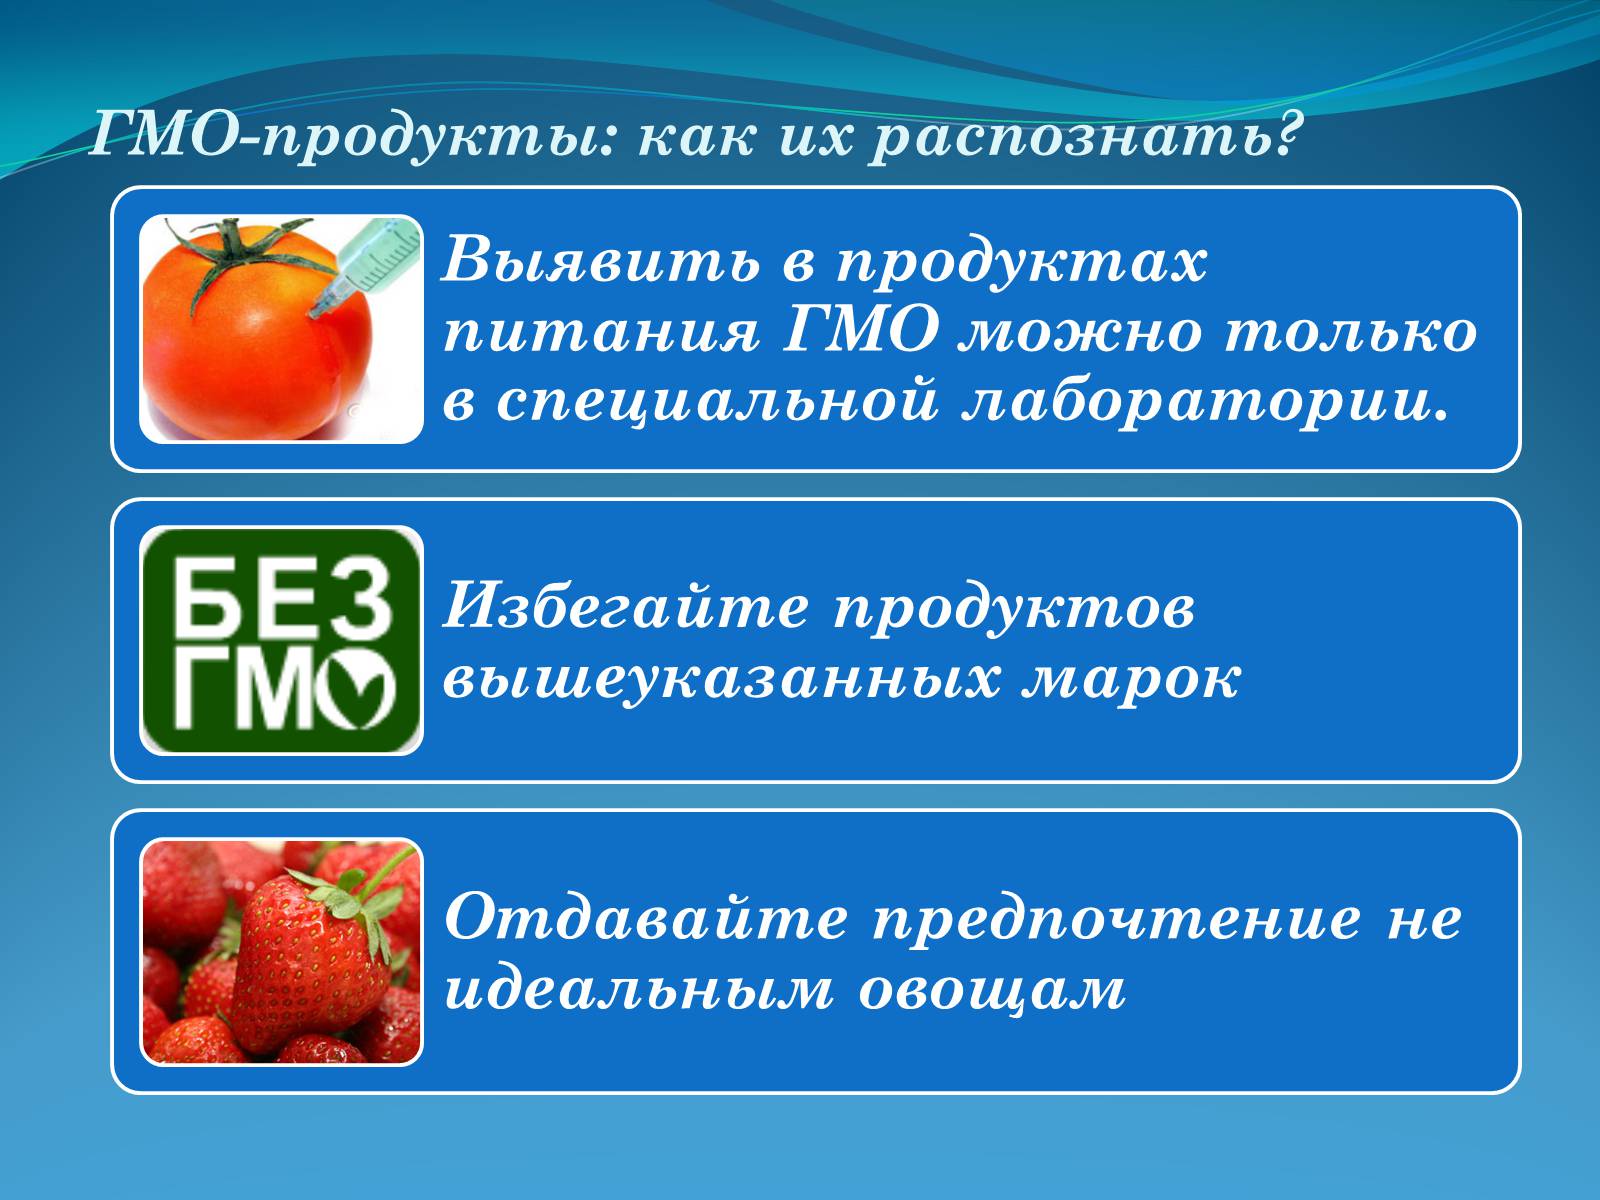 Презентація на тему «ГМО в пищевой промышленности» - Слайд #11